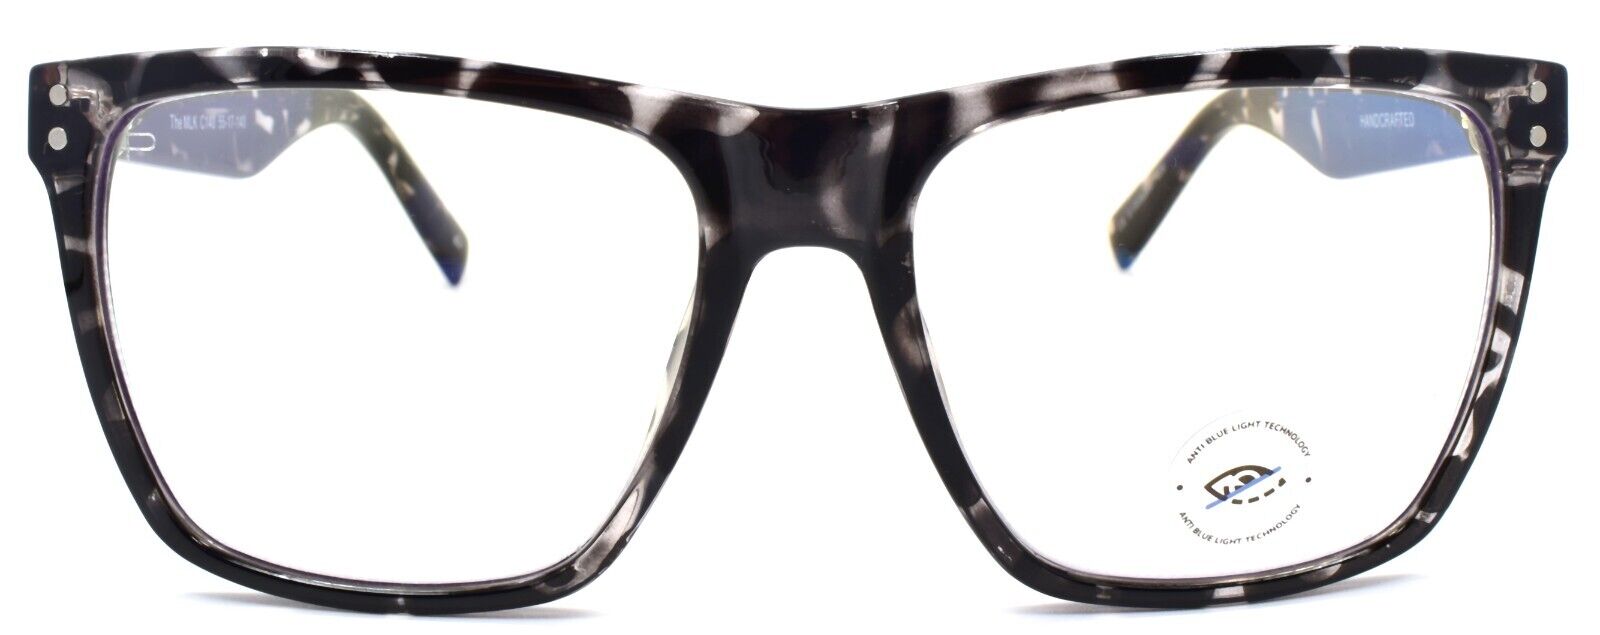 2-Prive Revaux The MLK C140 Eyeglasses Blue Light Blocking RX-ready Dark Tortoise-818893027406-IKSpecs